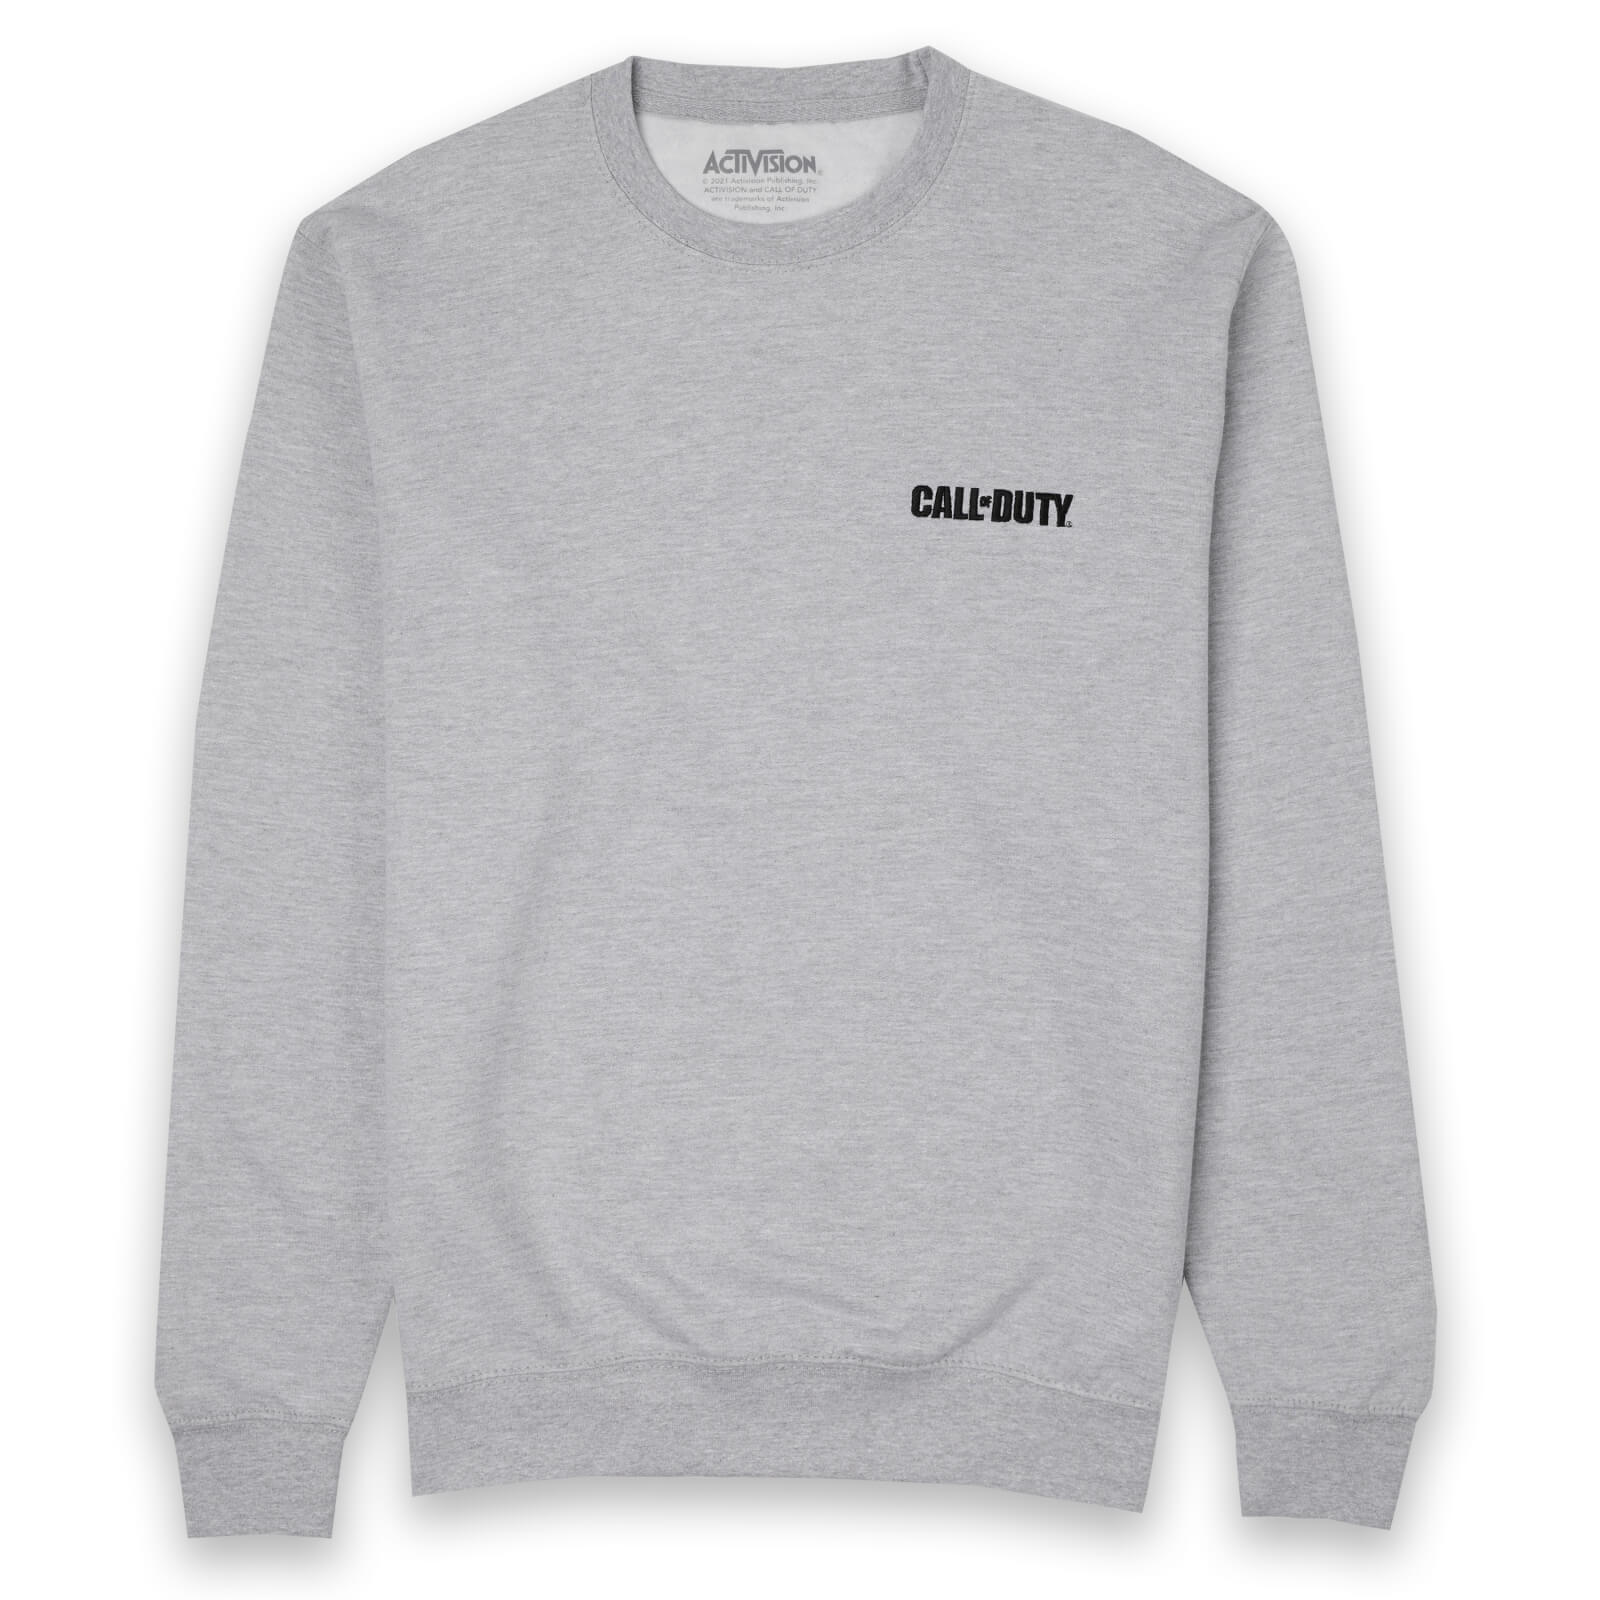 Call Of Duty Logo Embroidered Unisex Sweatshirt - Grey - S - Grey